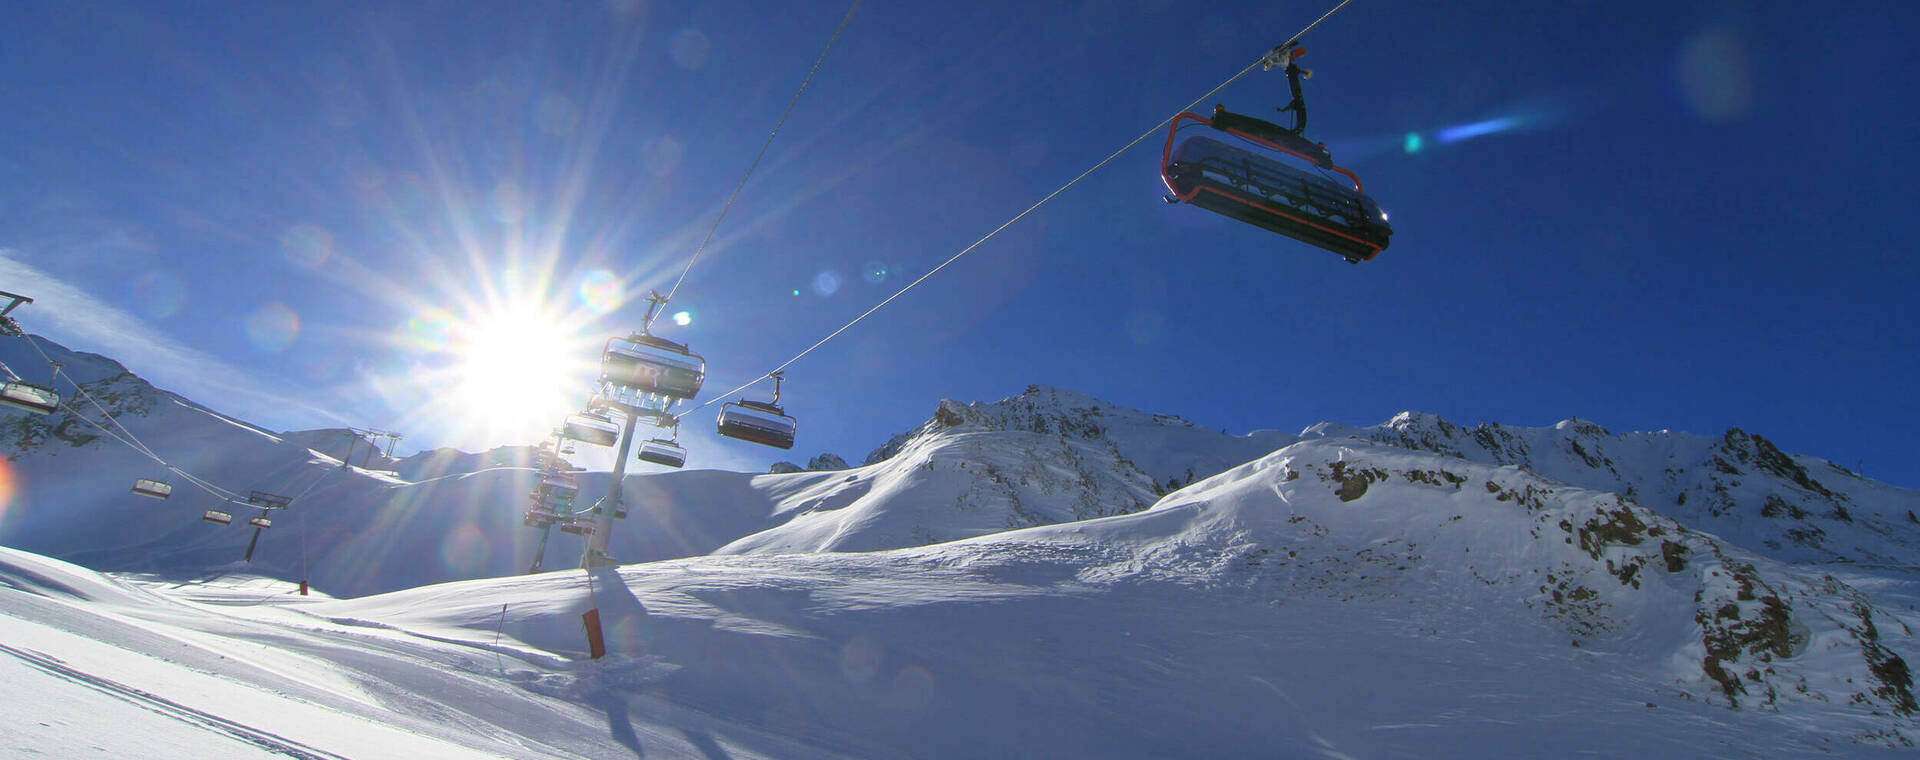  Silvretta Arena Ischgl one of the most beautiful ski resorts in Europe